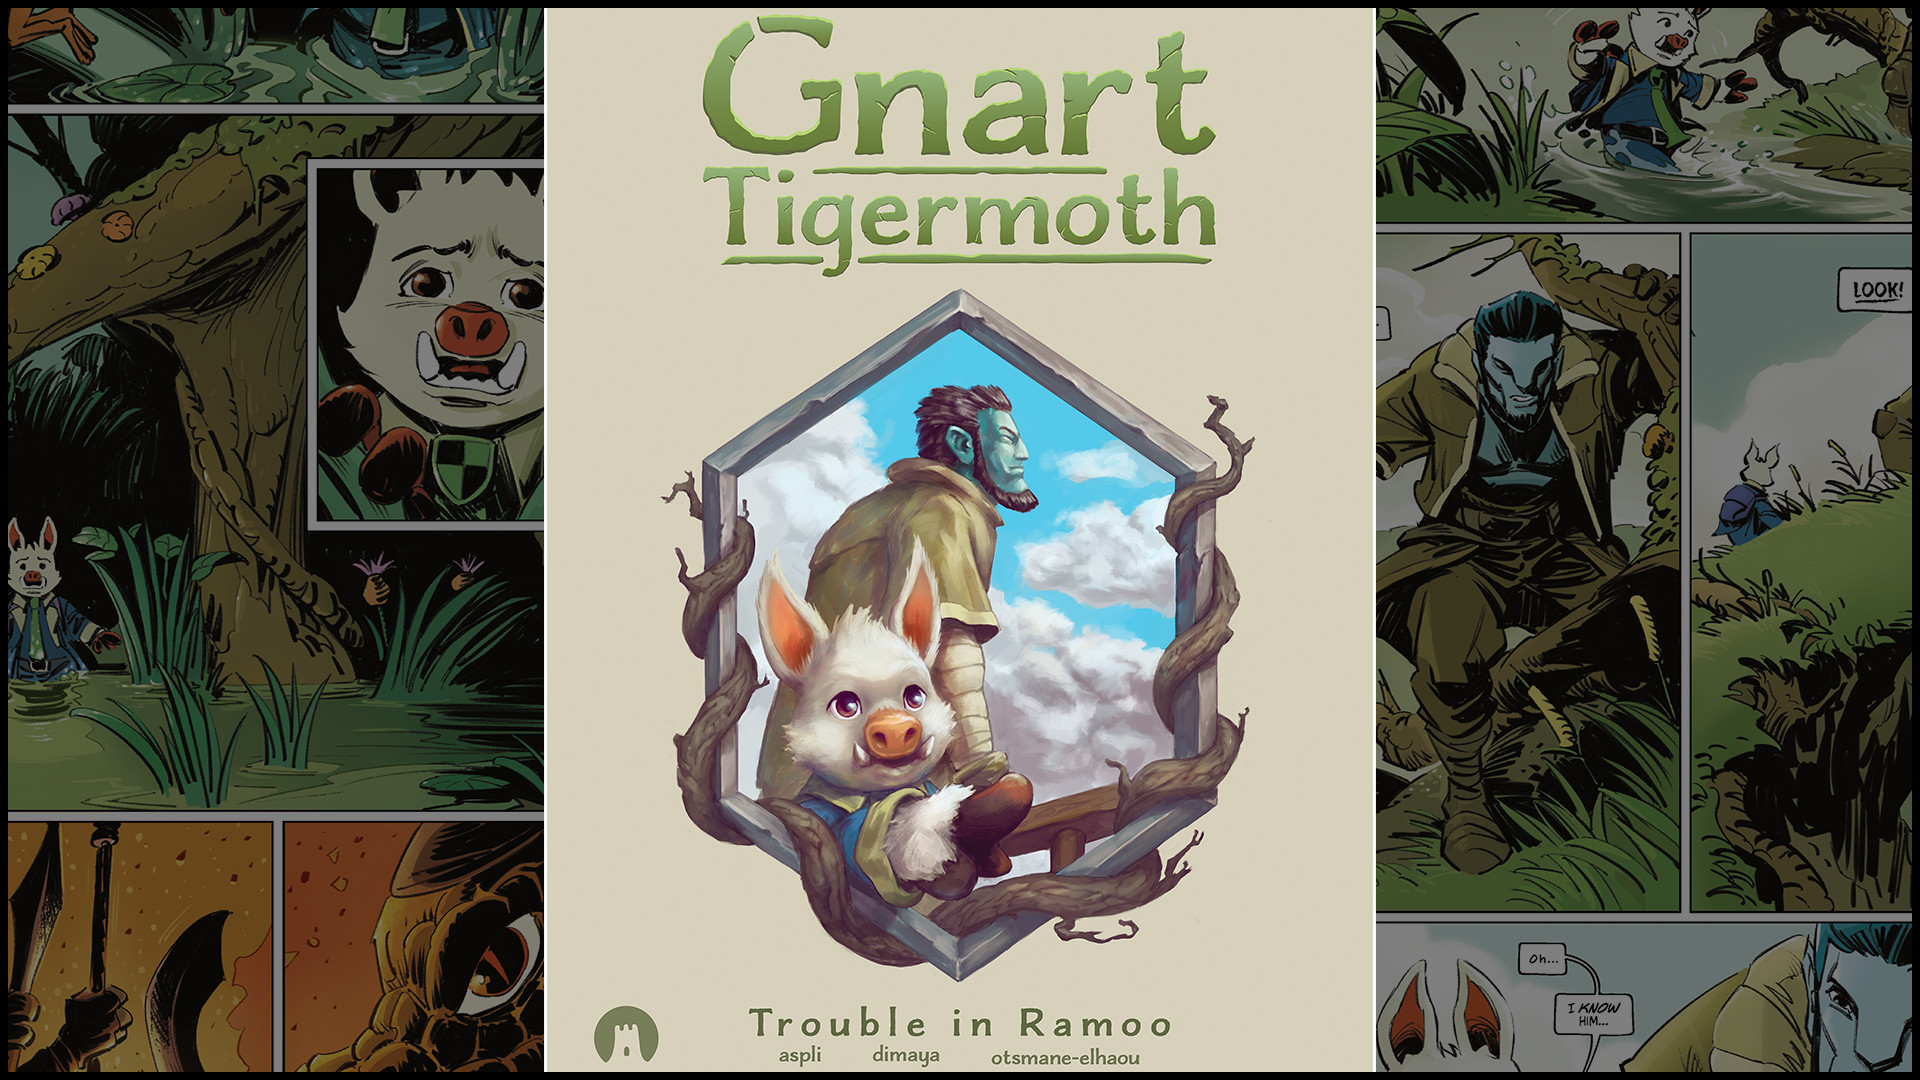 EARTHLOCK Comic Book #2: Gnart Tigermoth: Trouble in Ramoo Featured Screenshot #1